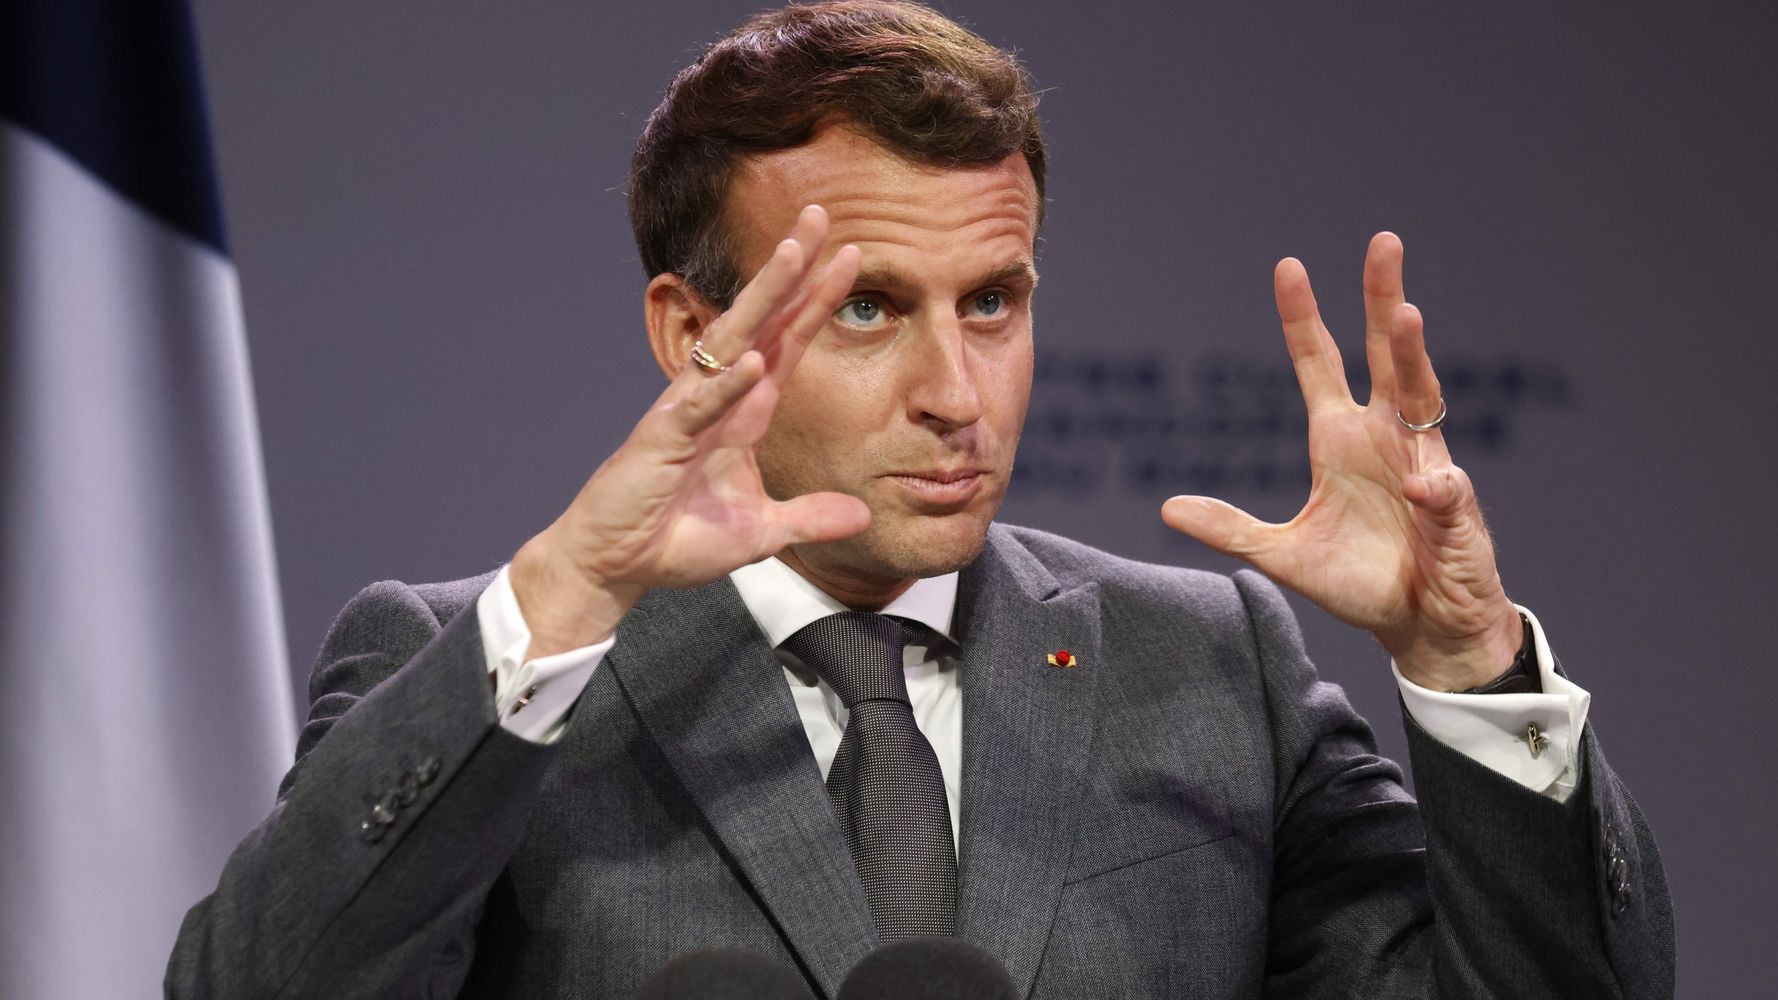 Emmanuel Macron: France Bears Some Responsibility For Rwanda’s Genocide